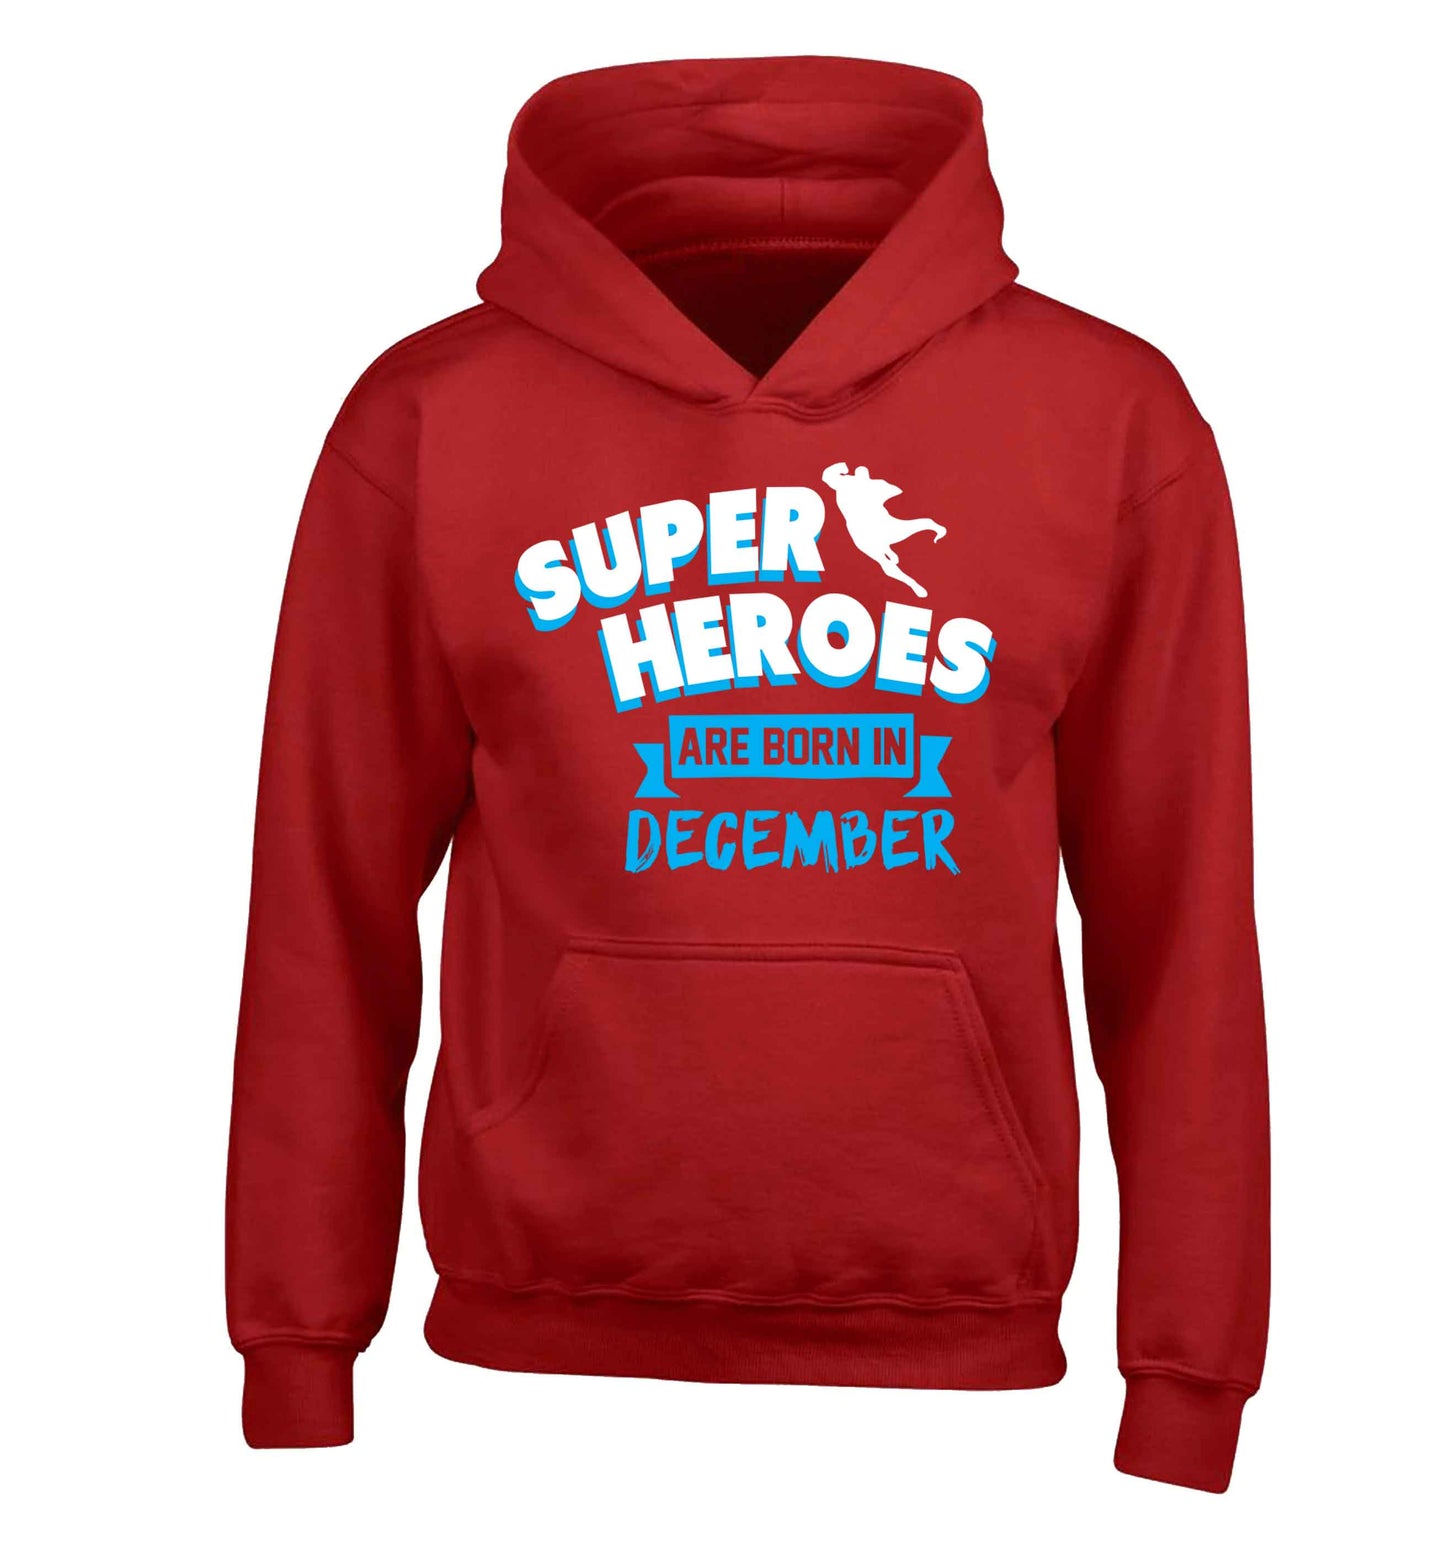 Superheroes are born in December children's red hoodie 12-13 Years